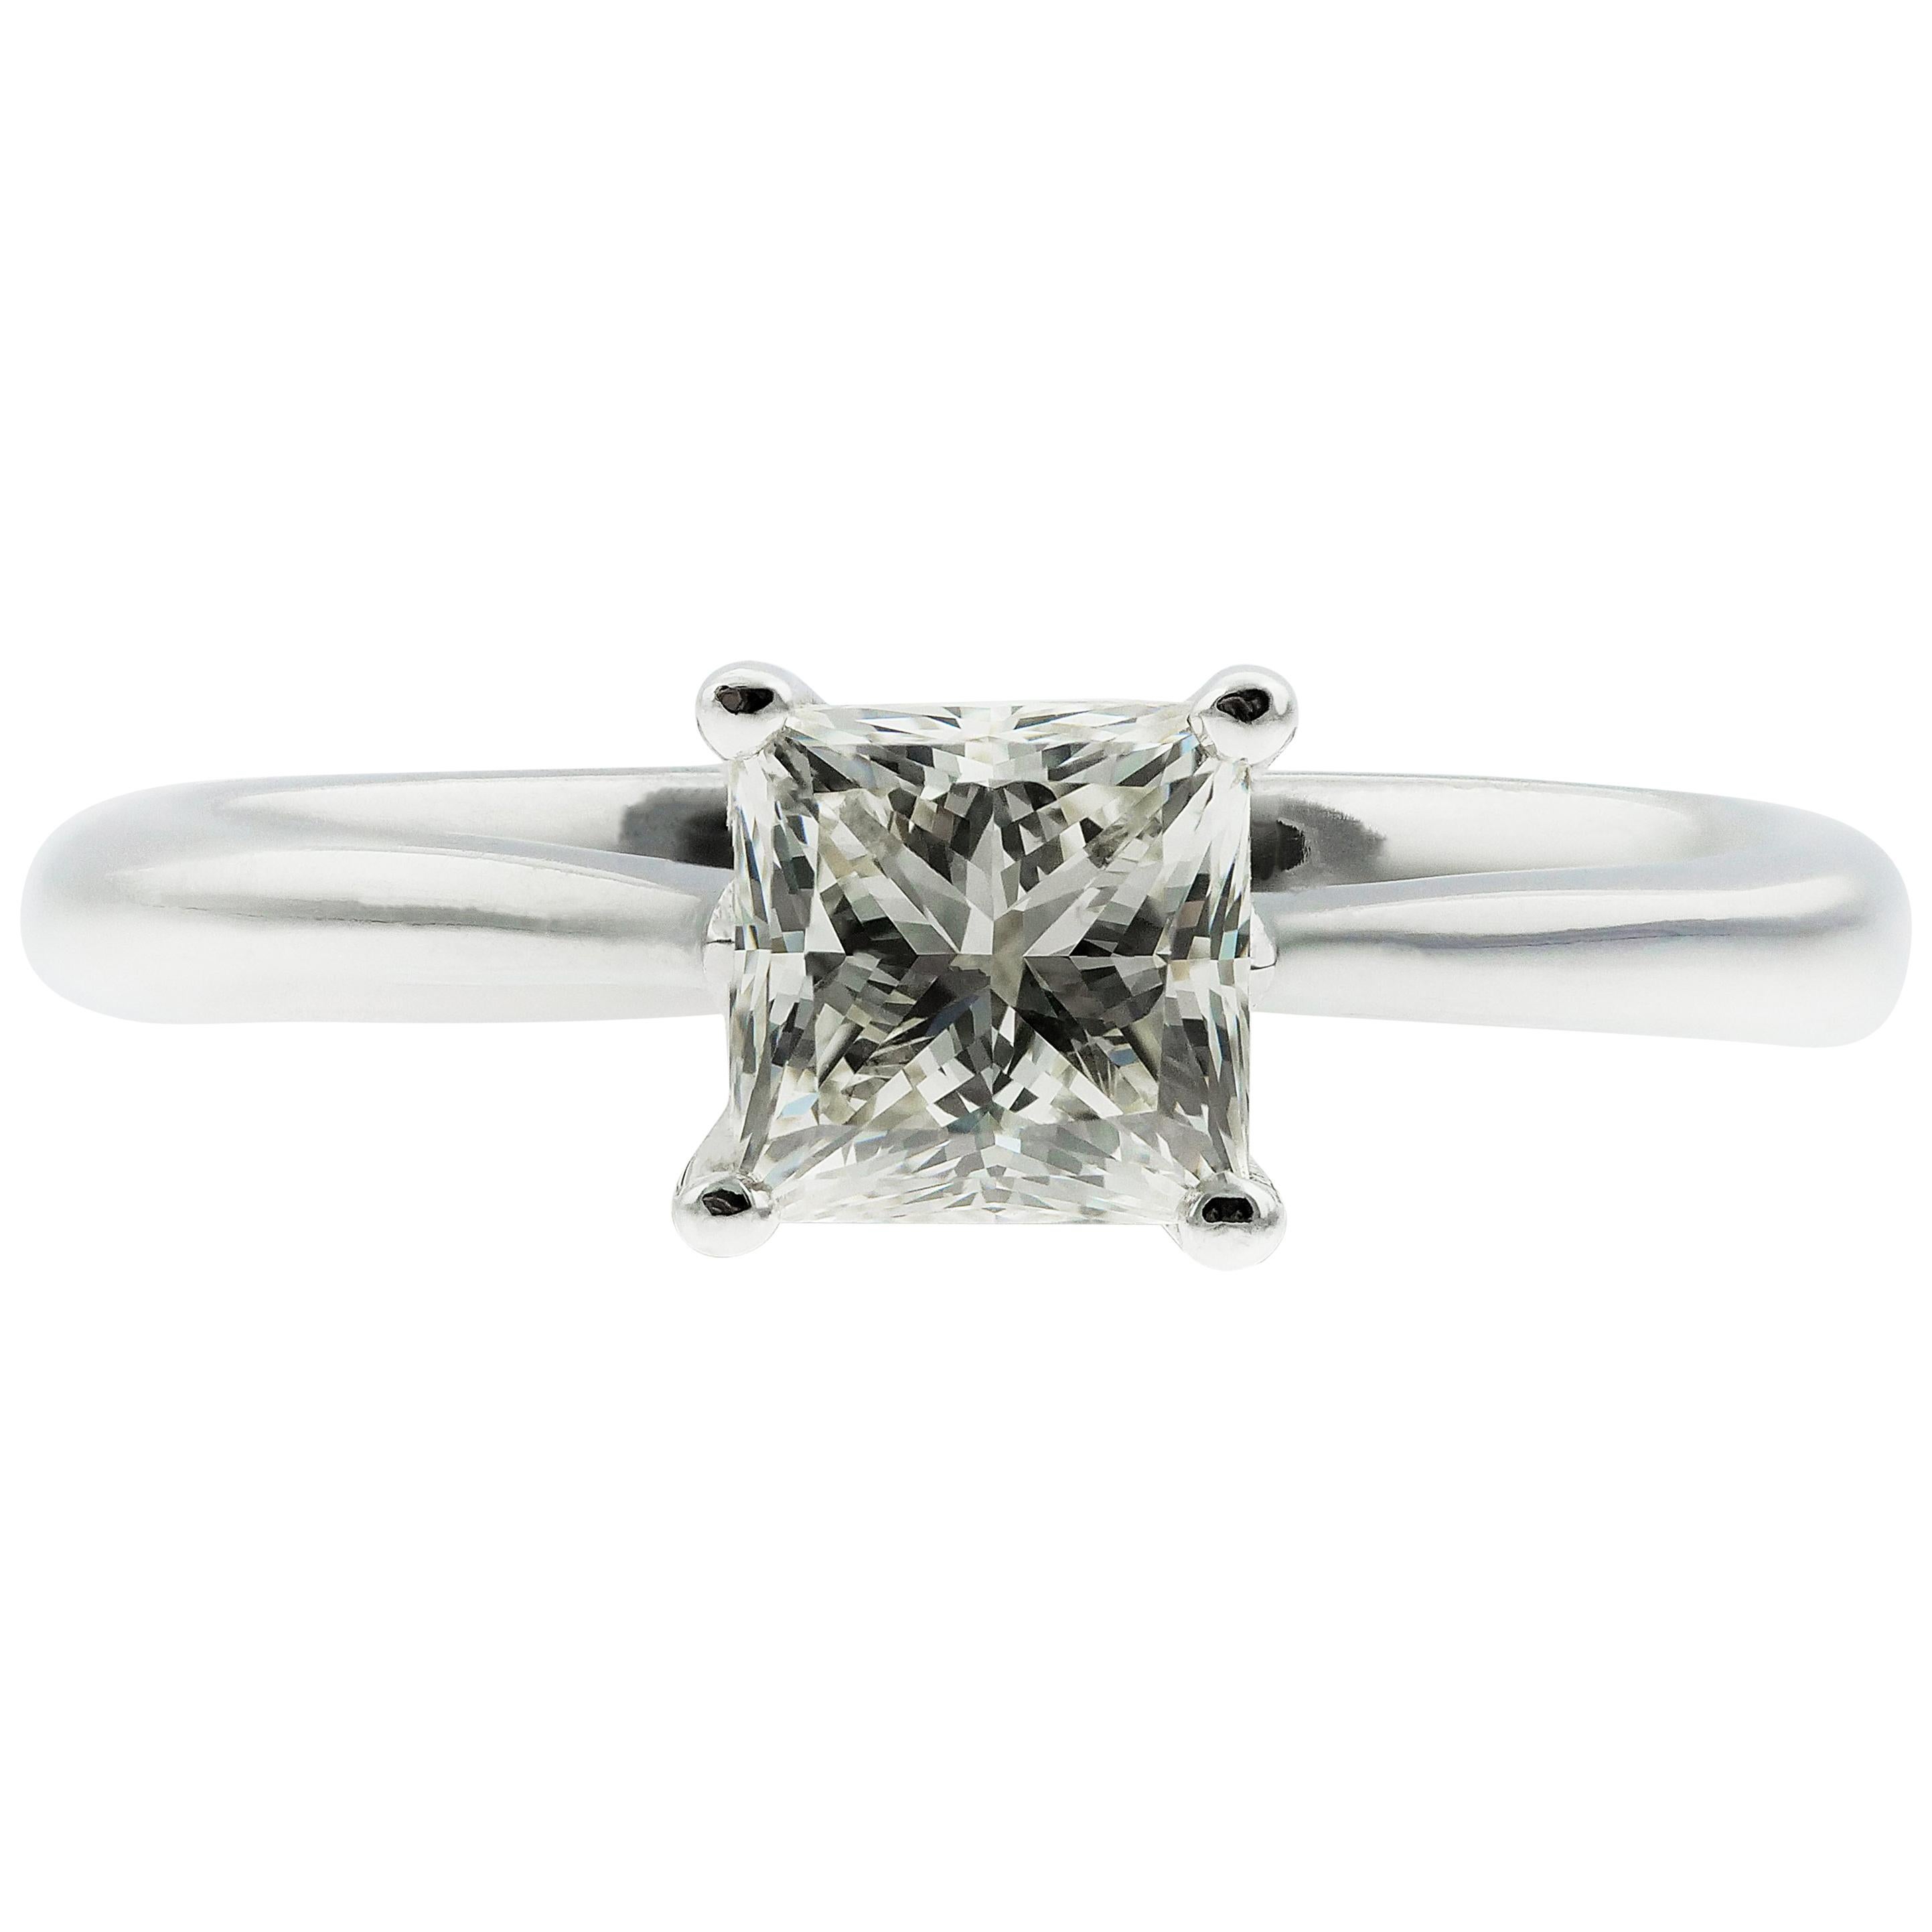 GIA Certified 0.92 Carat J VS1 Princess Cut Diamond Single Stone/Solitaire Ring For Sale